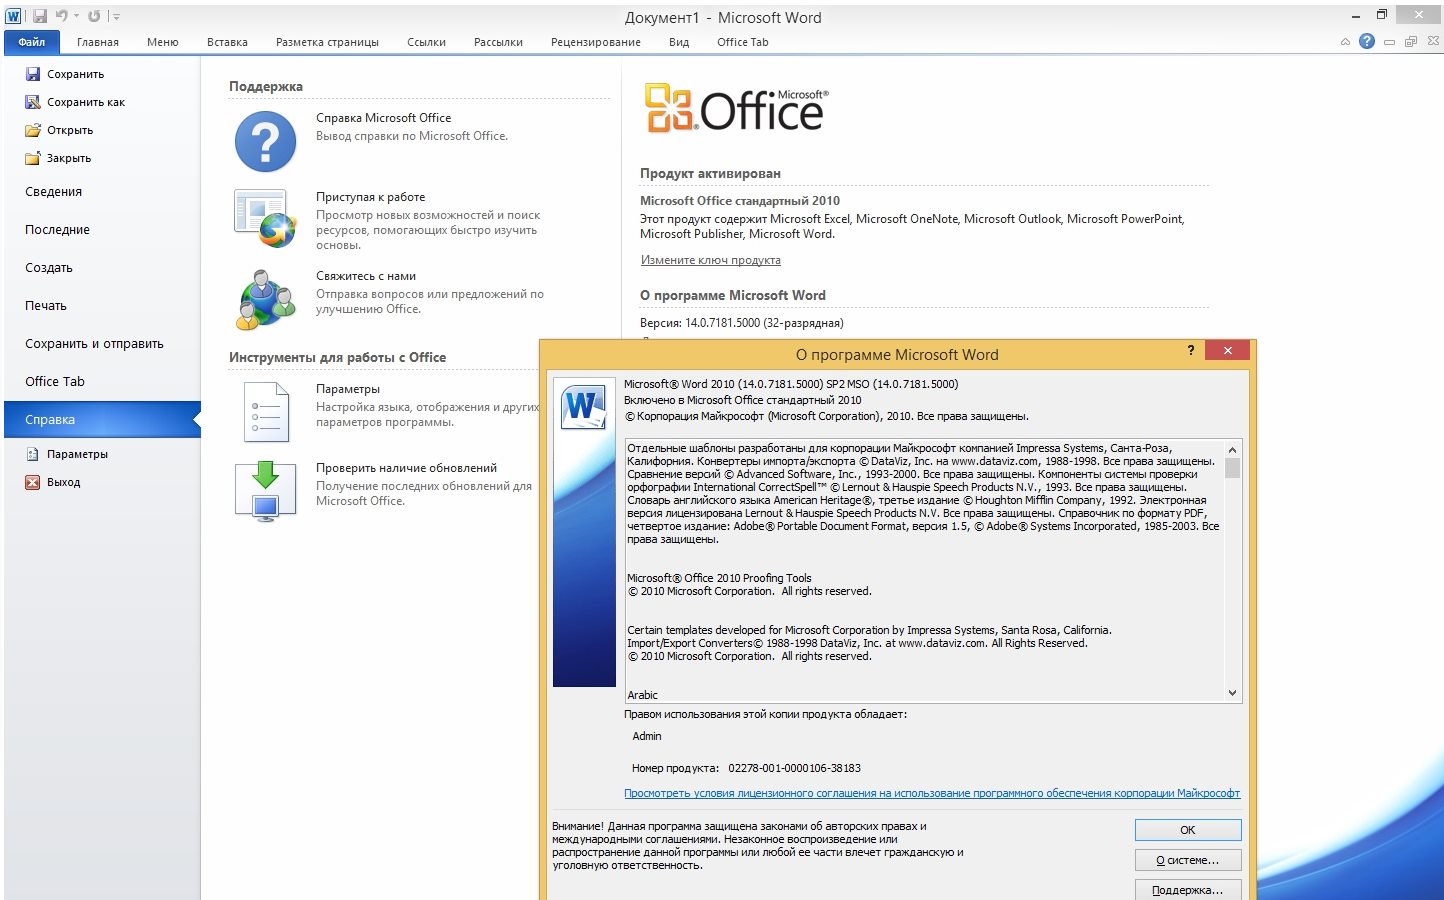 Офис 2010 год. MS Office 2010 Интерфейс. Ключи для Microsoft Office 2010 Standard. Интерфейс программ Microsoft Office шаблон. Пакет Майкрософт офис 2010.